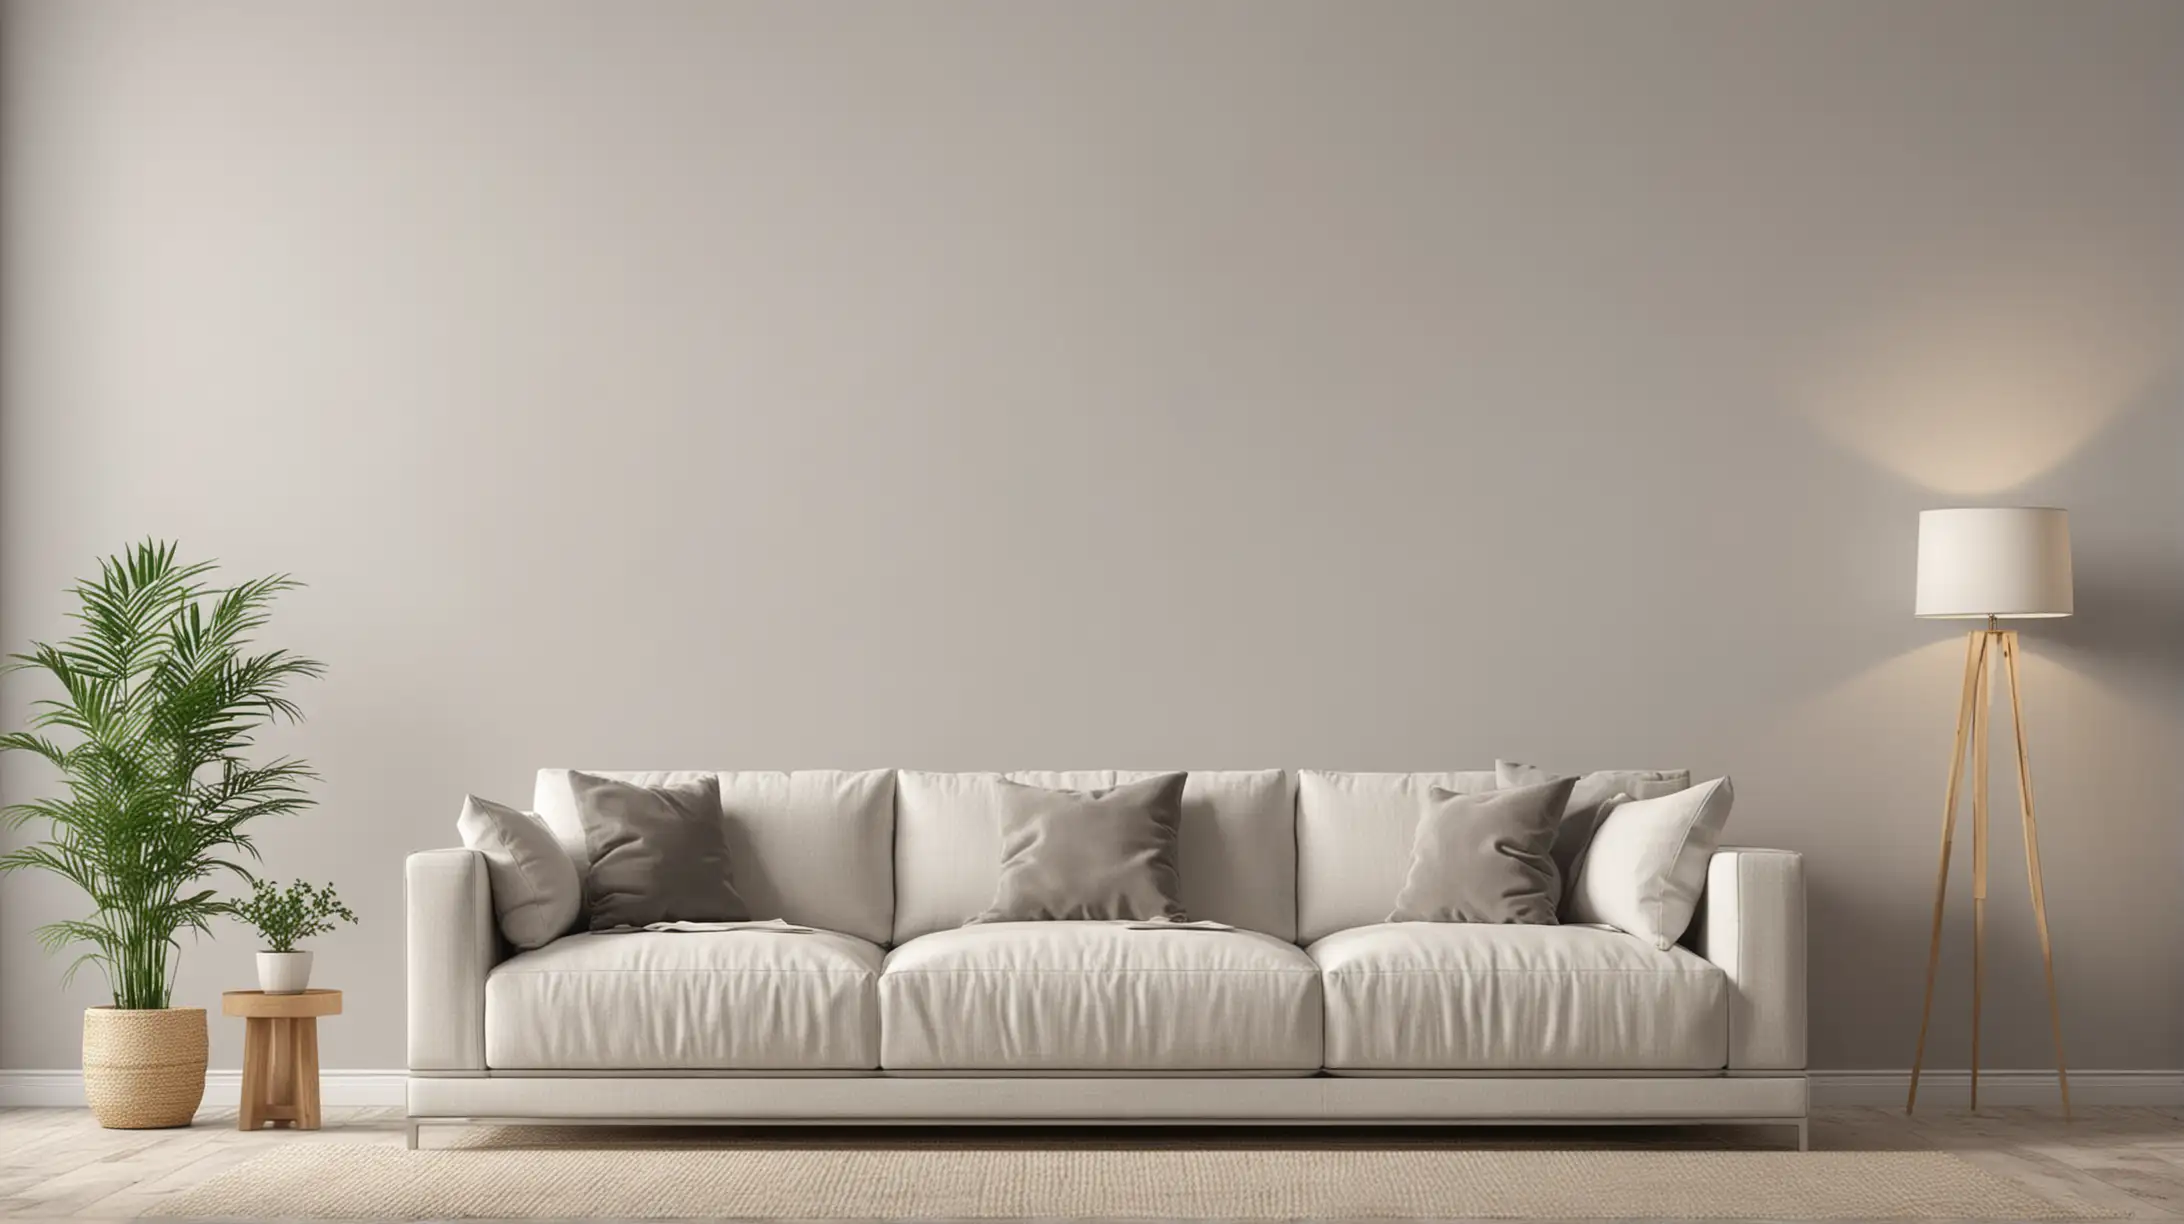 Modern Living Room Wall Mockup with Sofa and Artwork